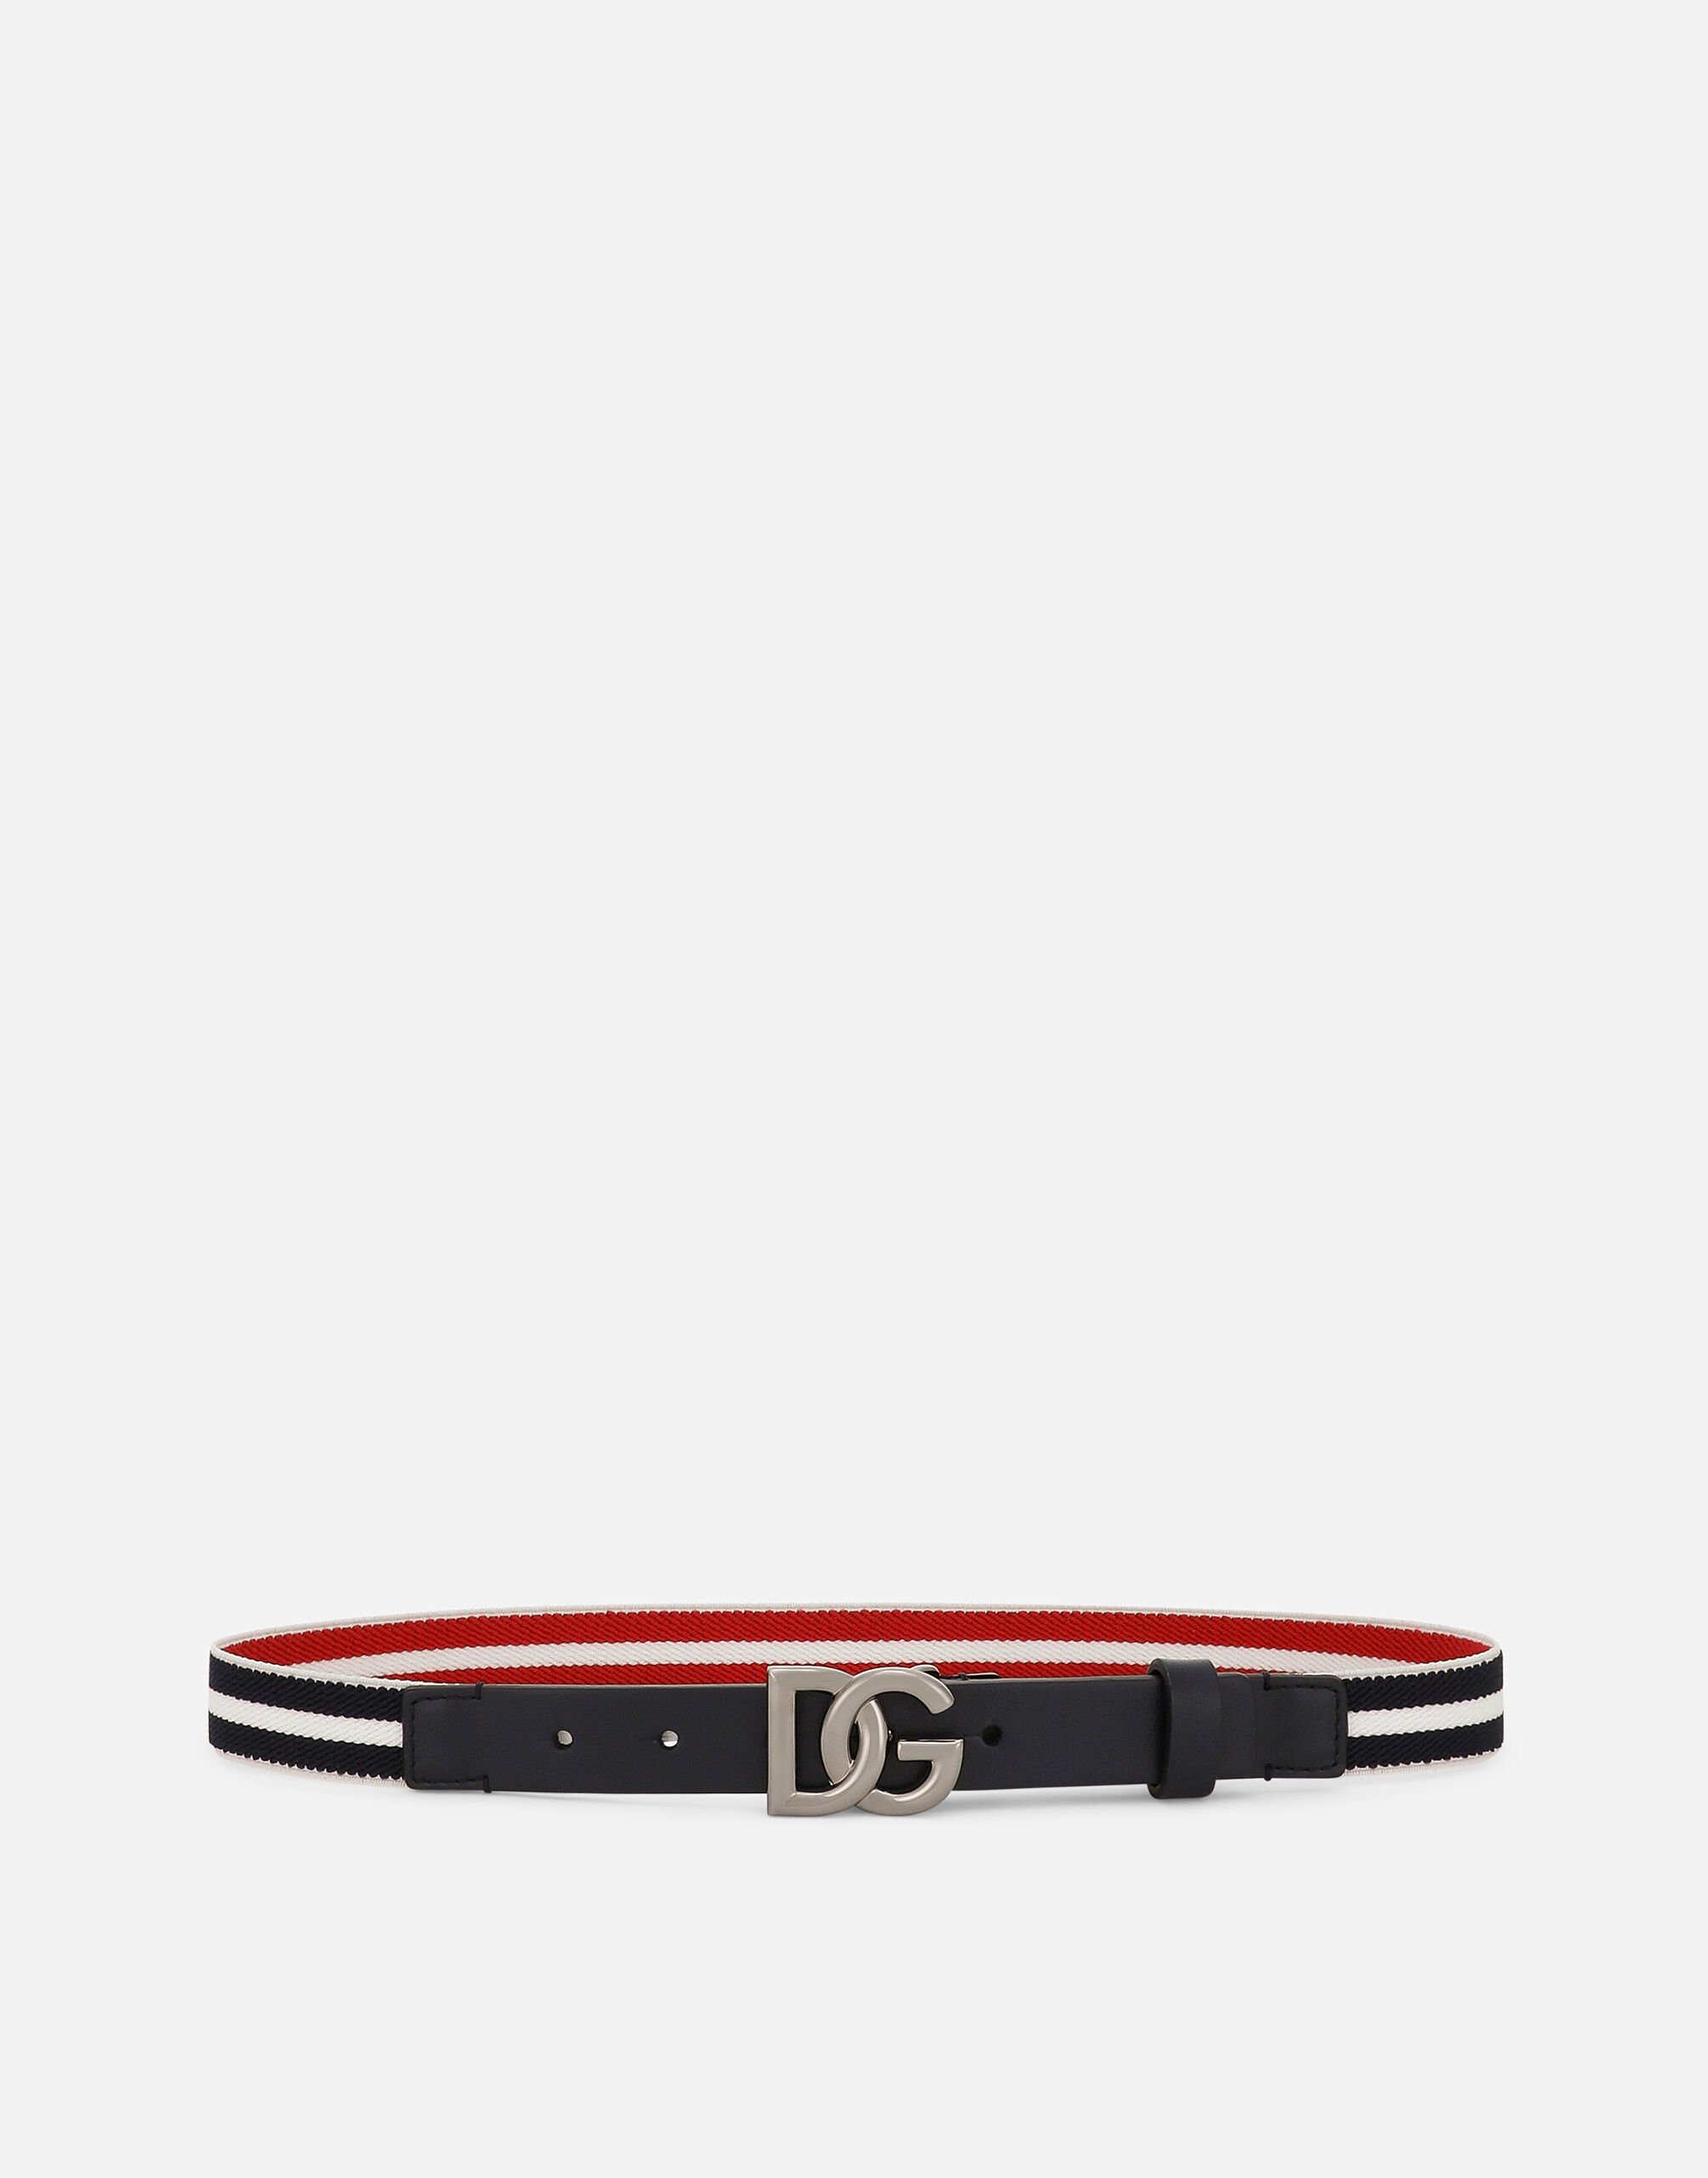 Dolce & Gabbana Stretch belt with DG logo Black EM0096AB124